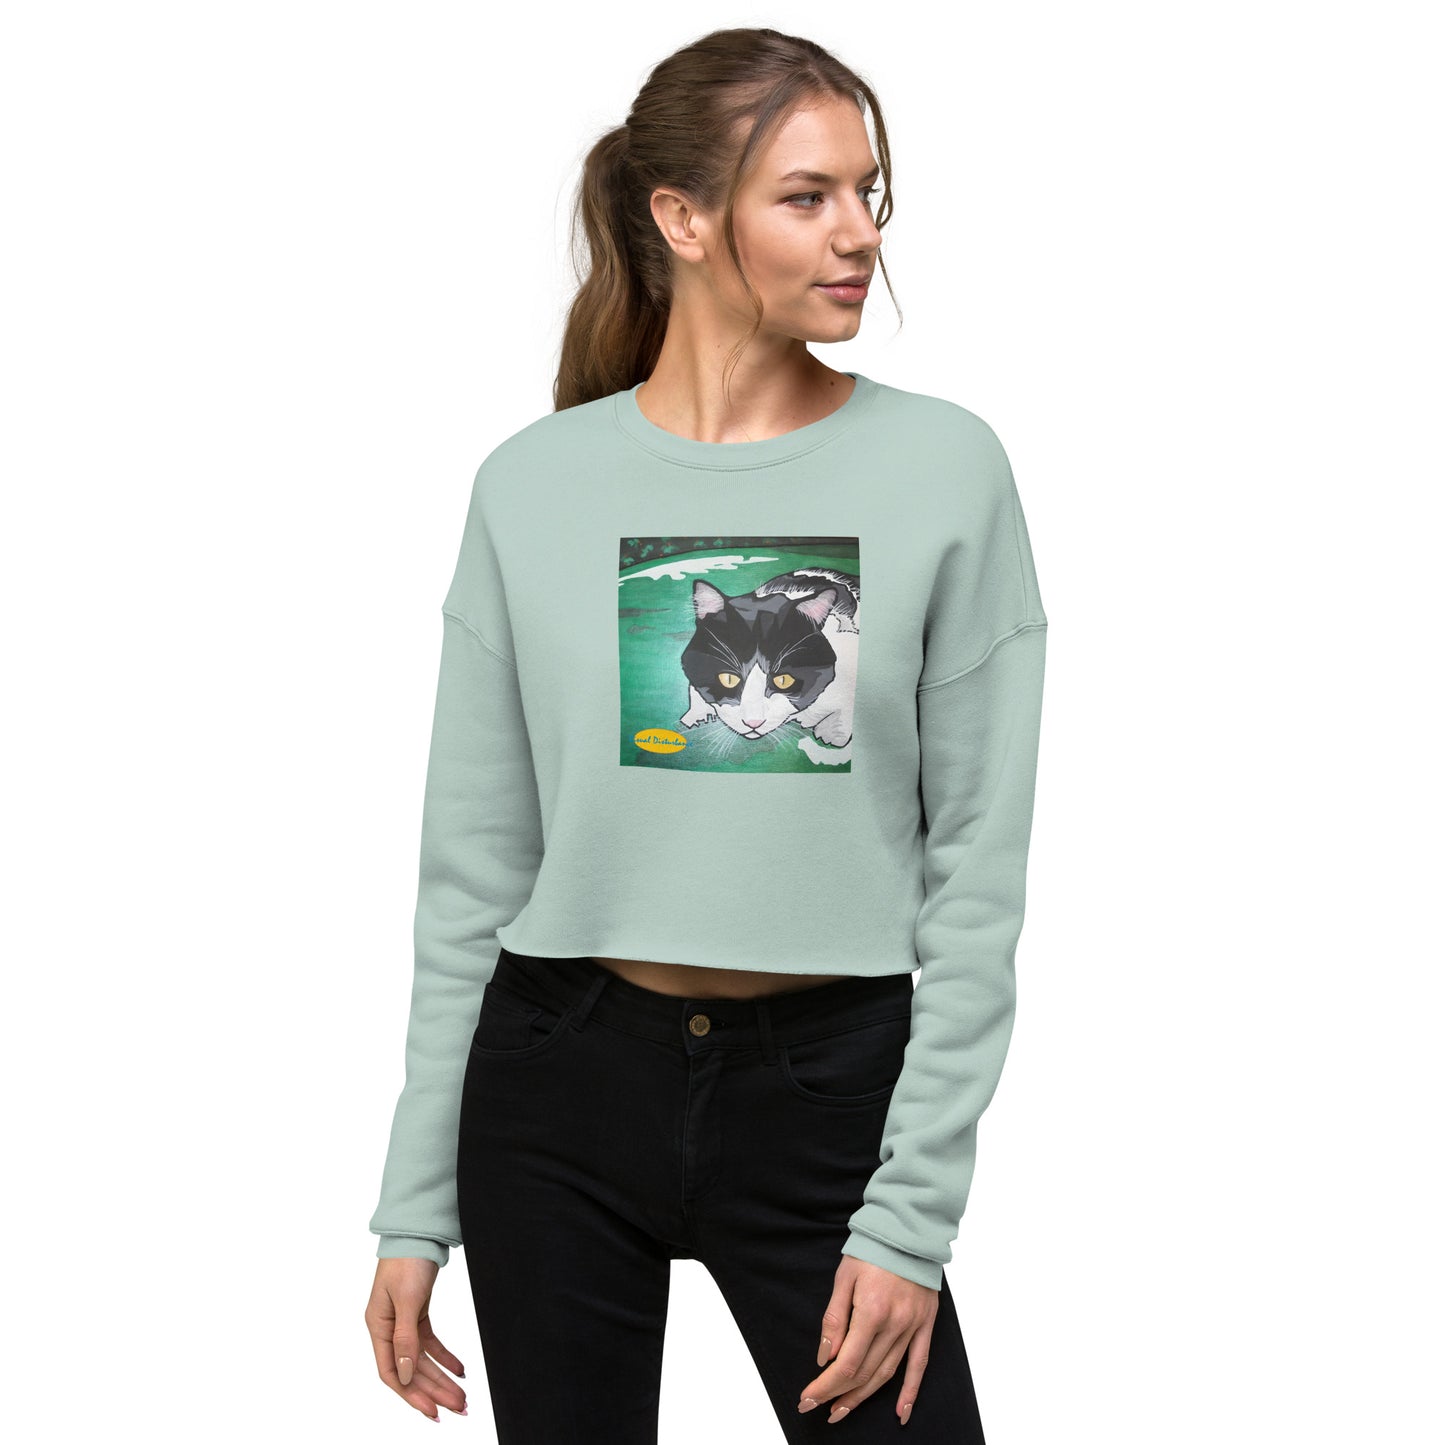 Black and White Cat on Green Grass Crop Sweatshirt